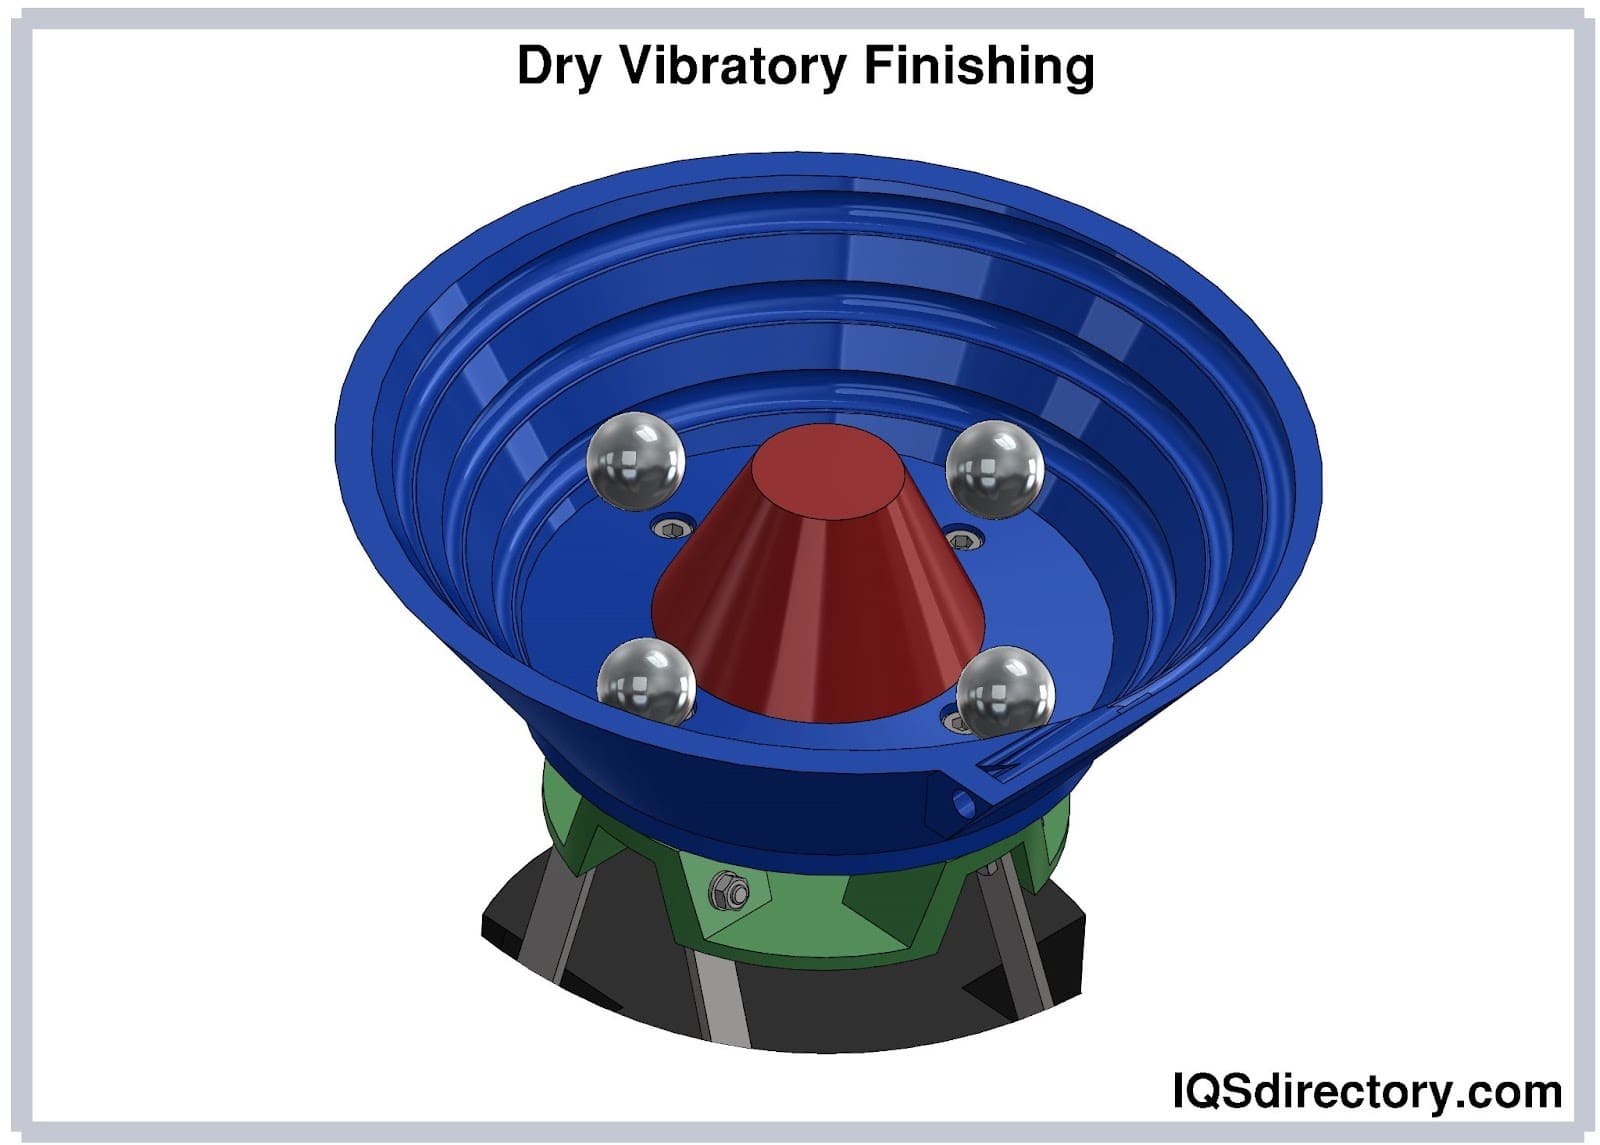 Dry Vibratory Finishing